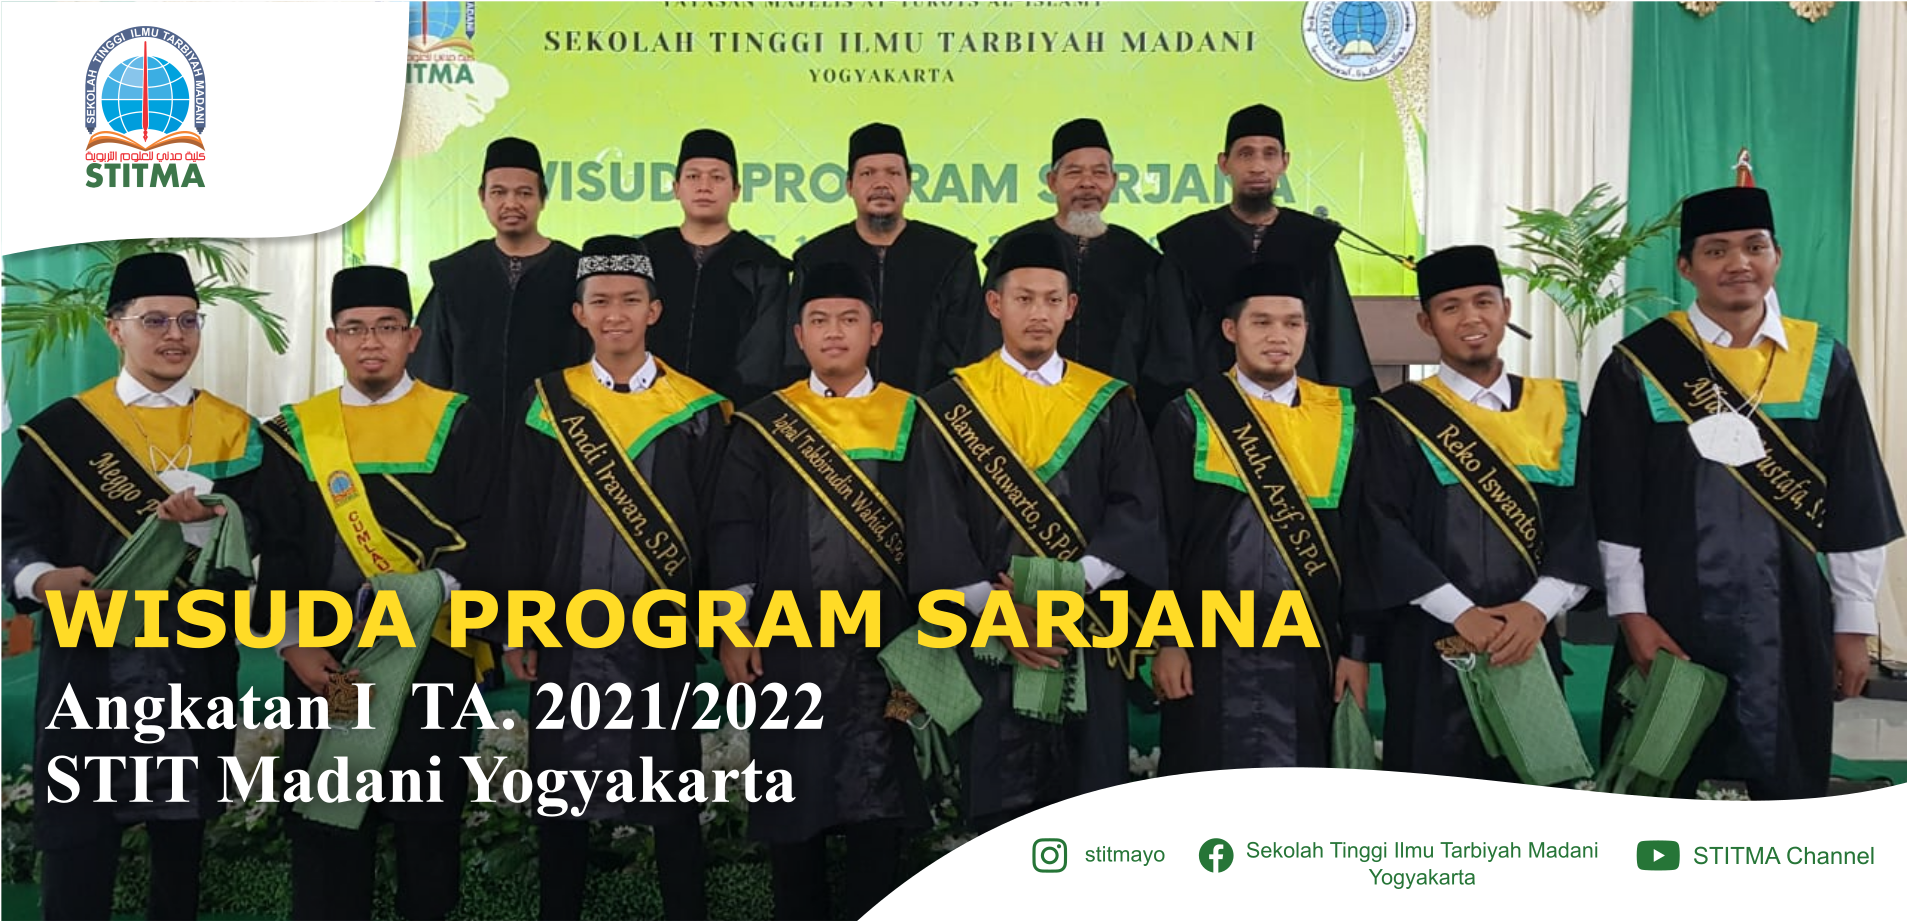 Wisuda Program Sarjana Angkatan I Tahun Akademik 2021/2022